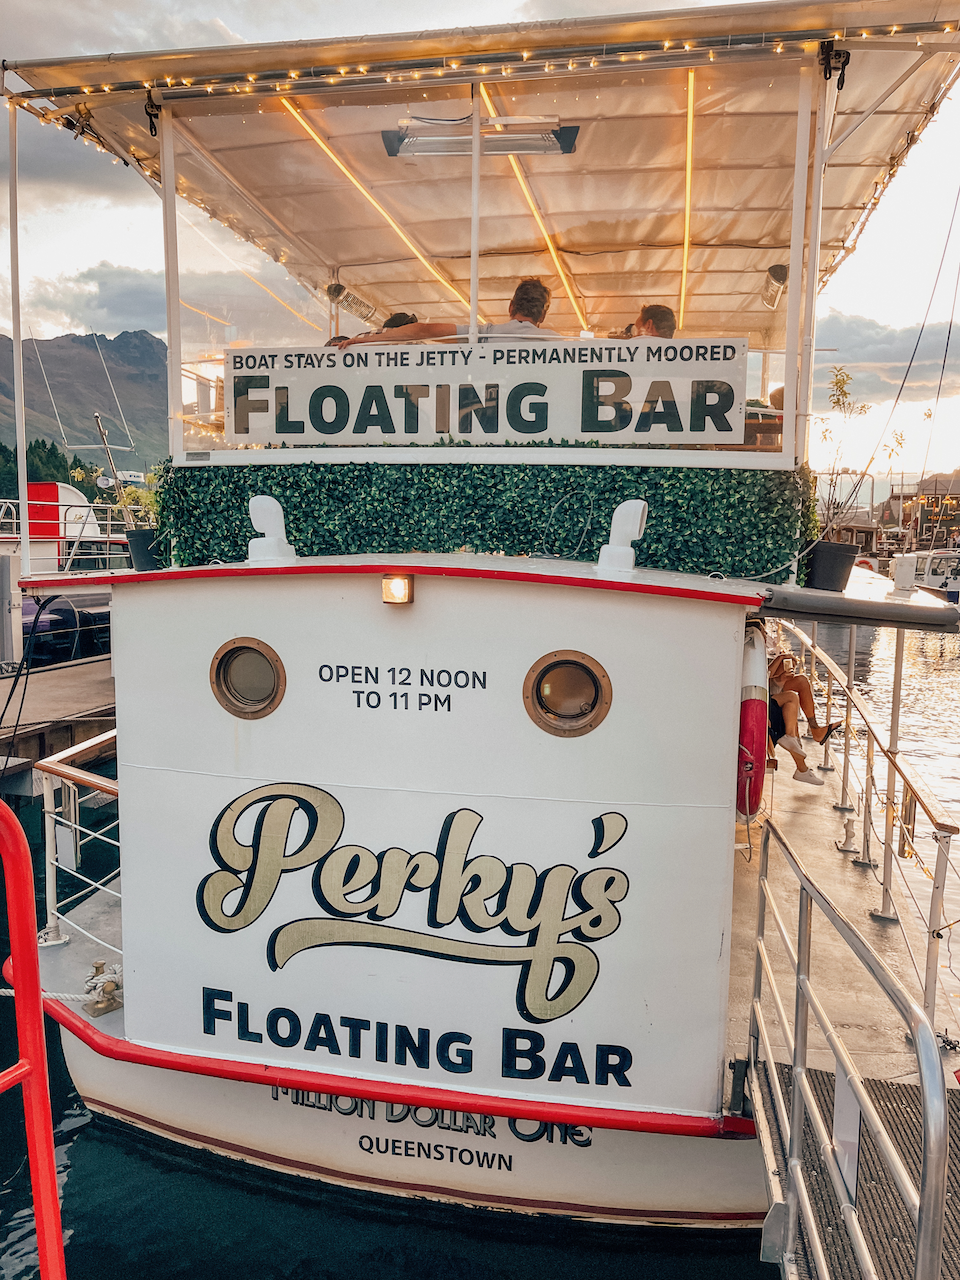 Bar flottant Perky's - Queenstown - Nouvelle-Zélande